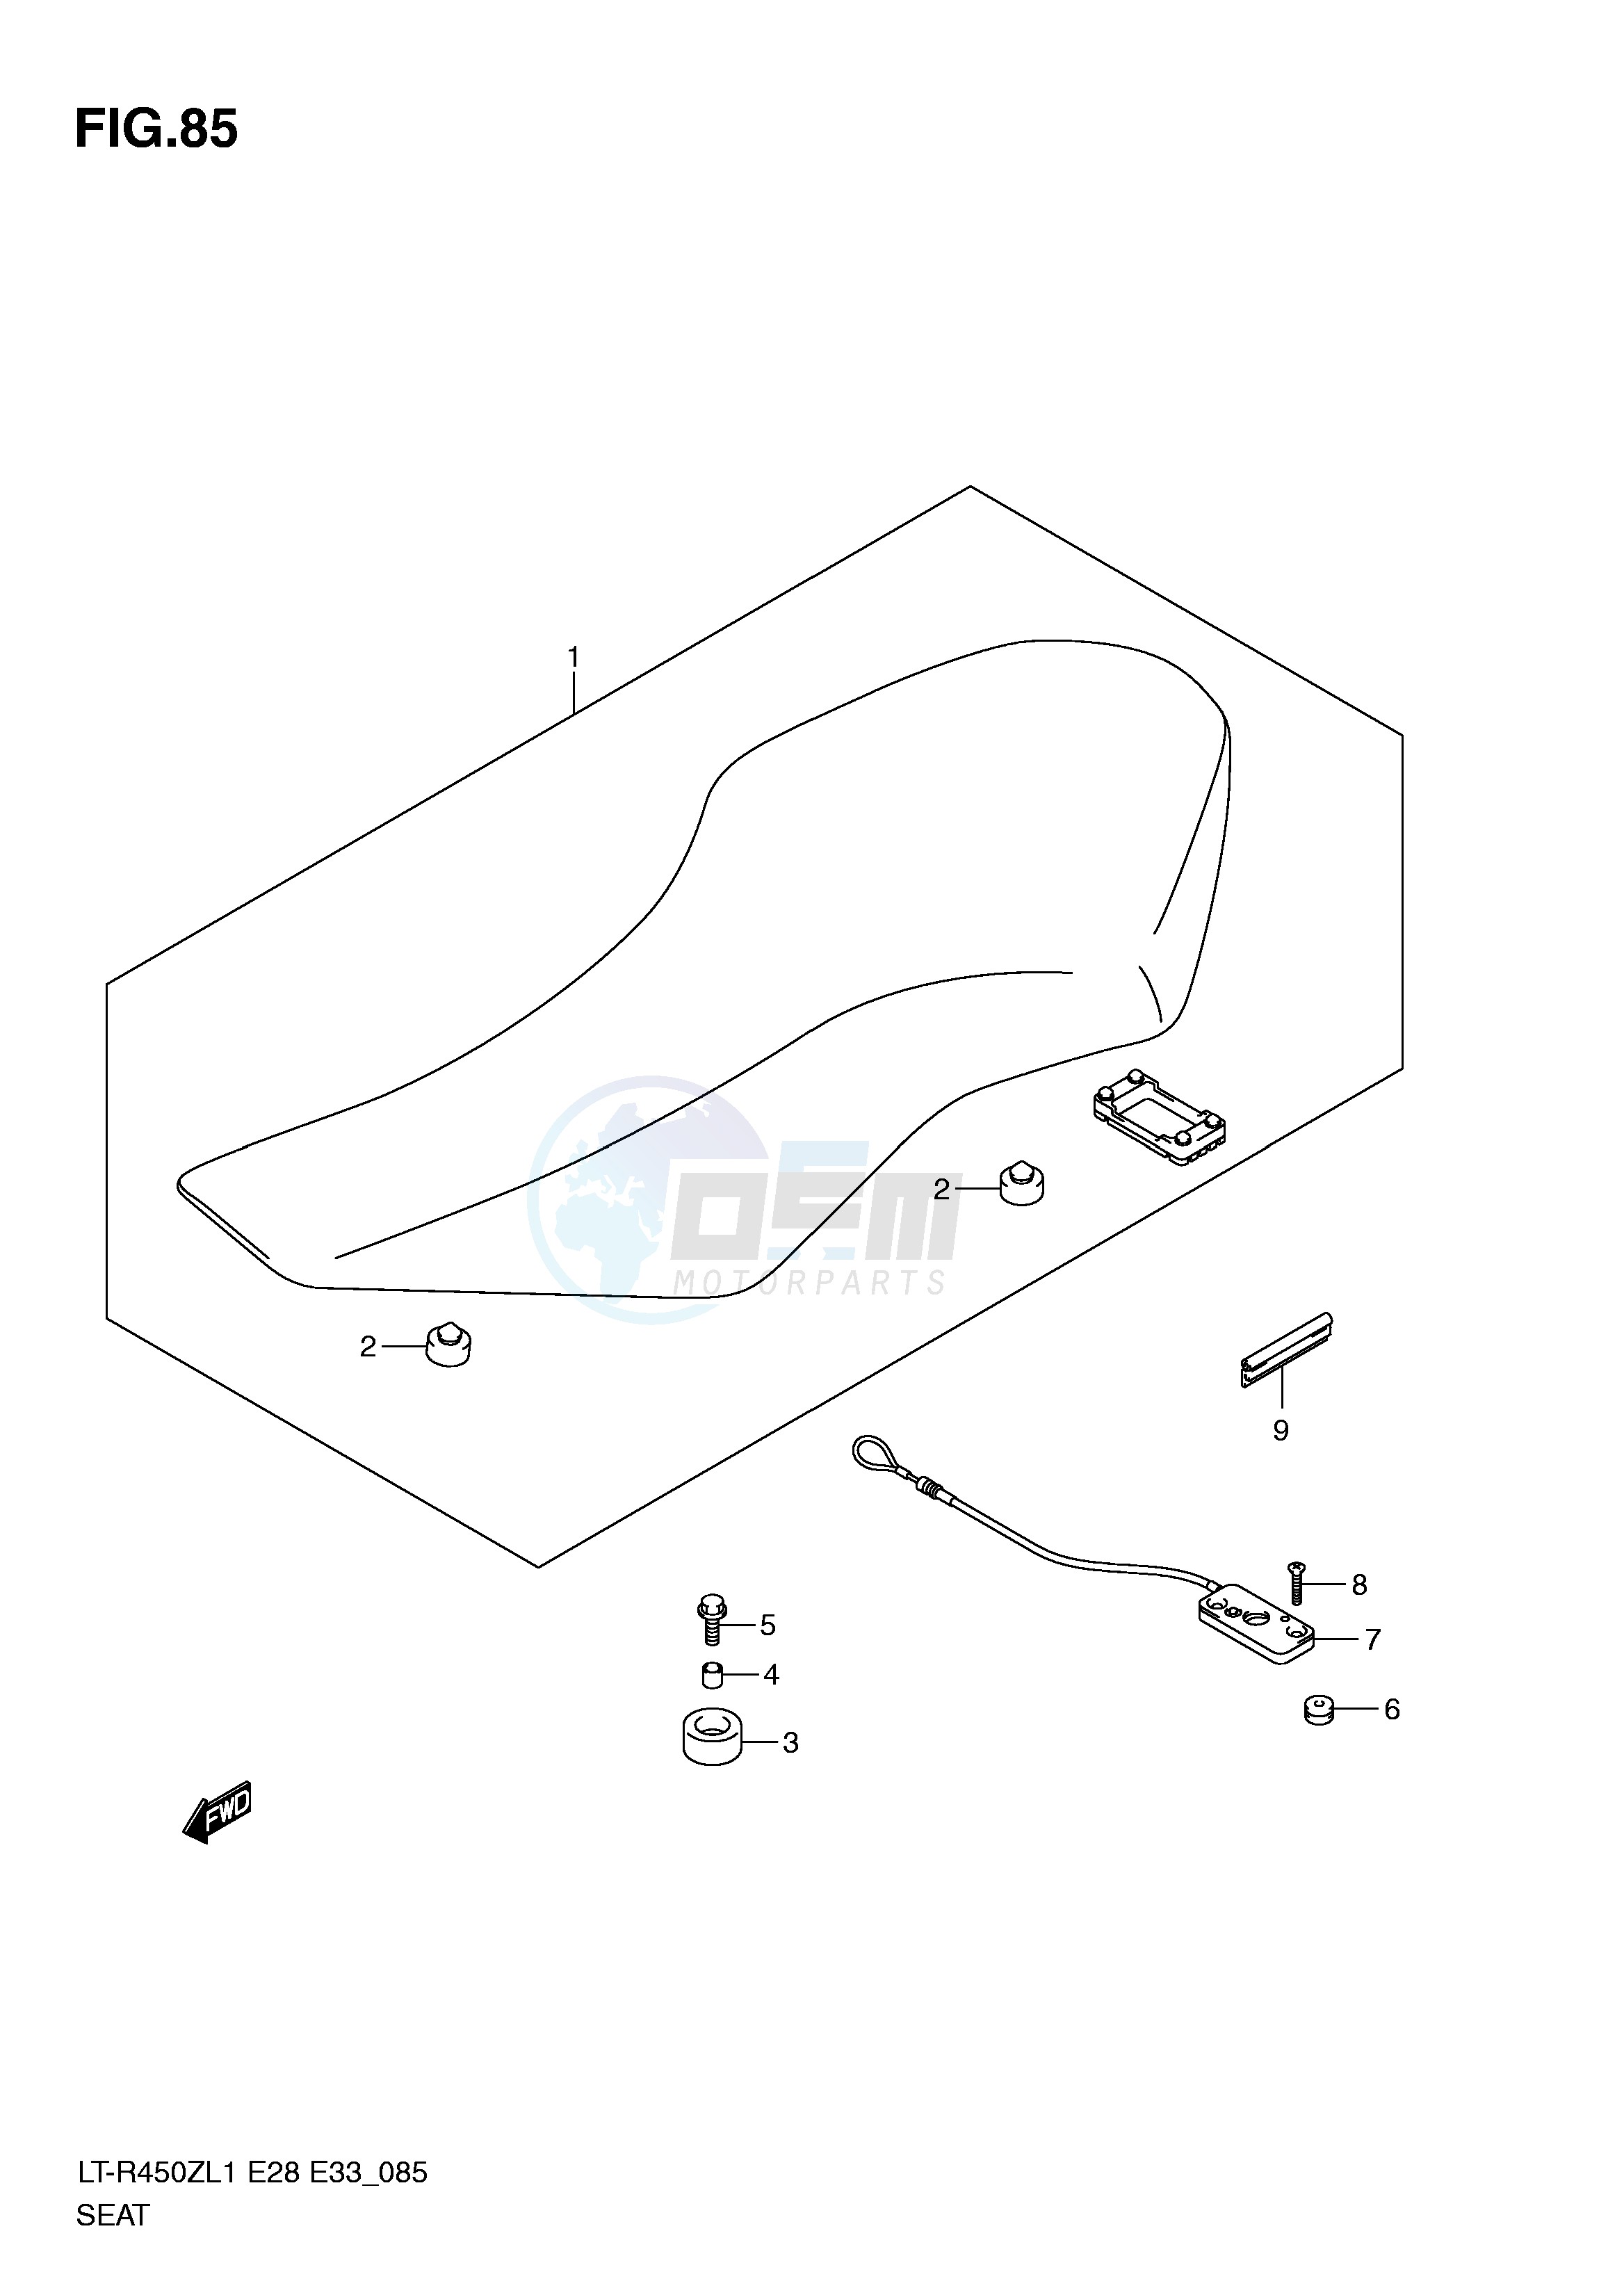 SEAT (LT-R450L1 E33) blueprint